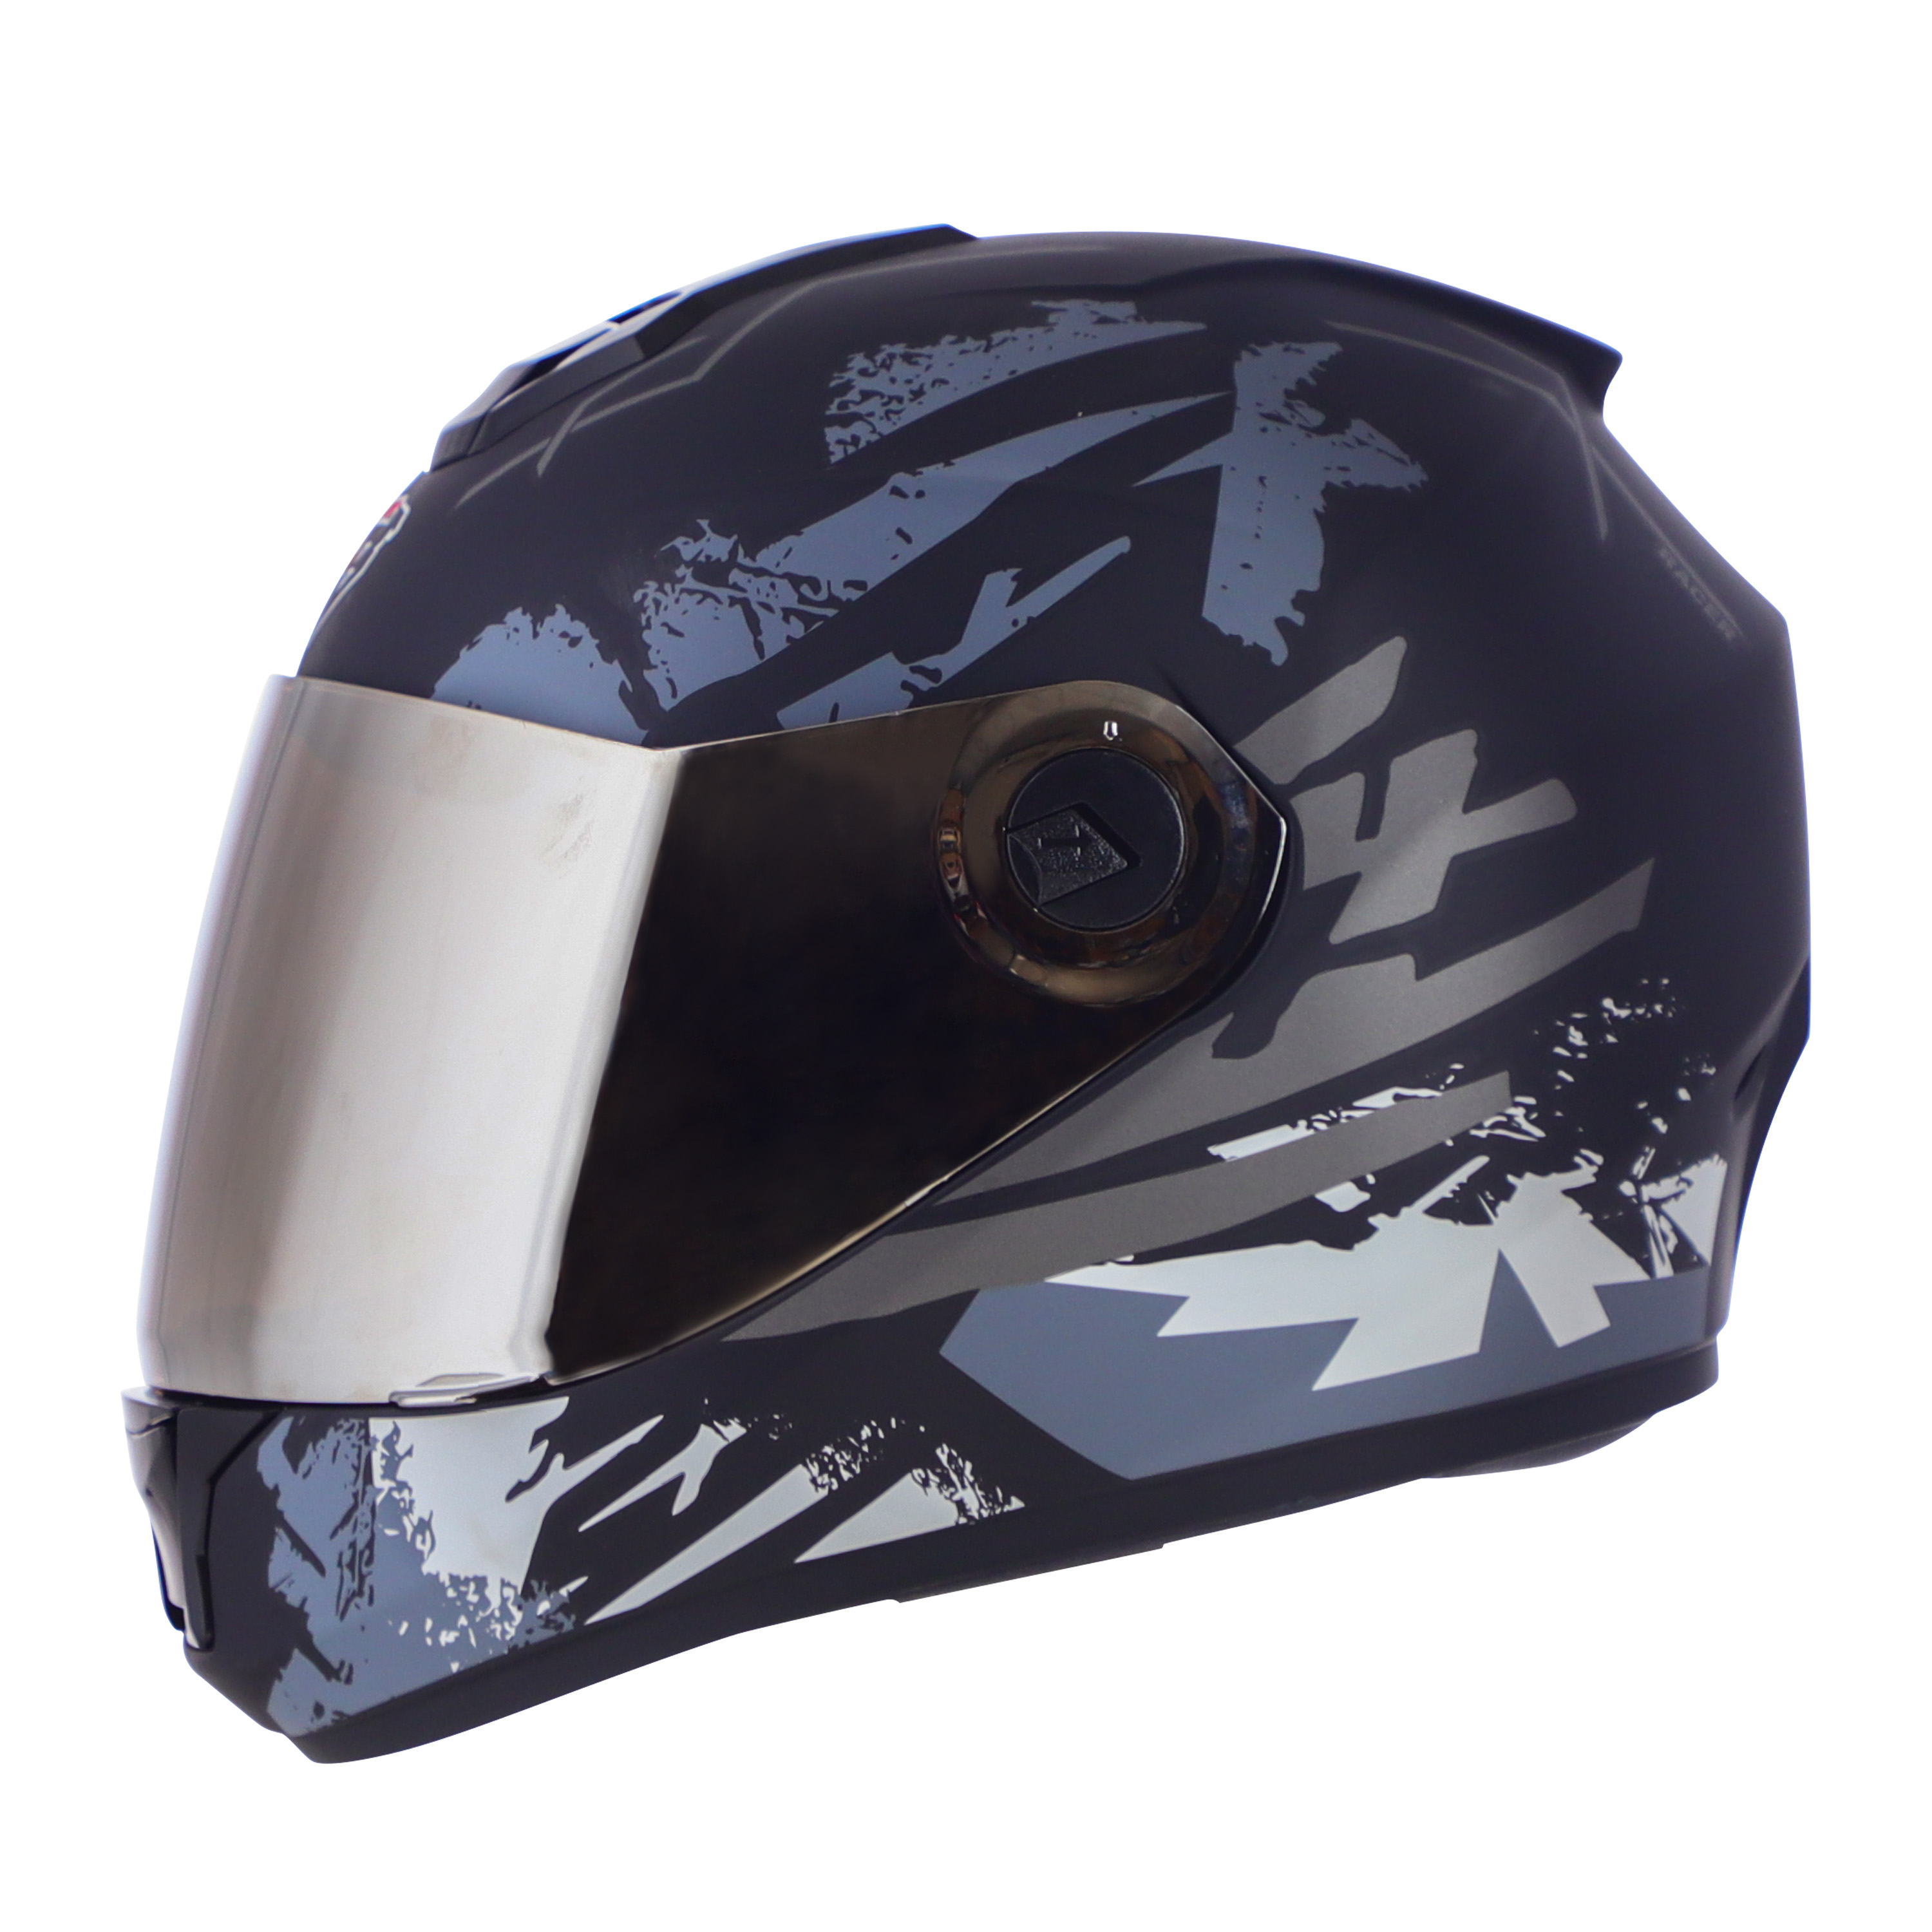 Steelbird SBH-11 Zoom Racer ISI Certified Full Face Graphic Helmet For Men And Women (Matt Black Grey With Chrome Silver Visor)